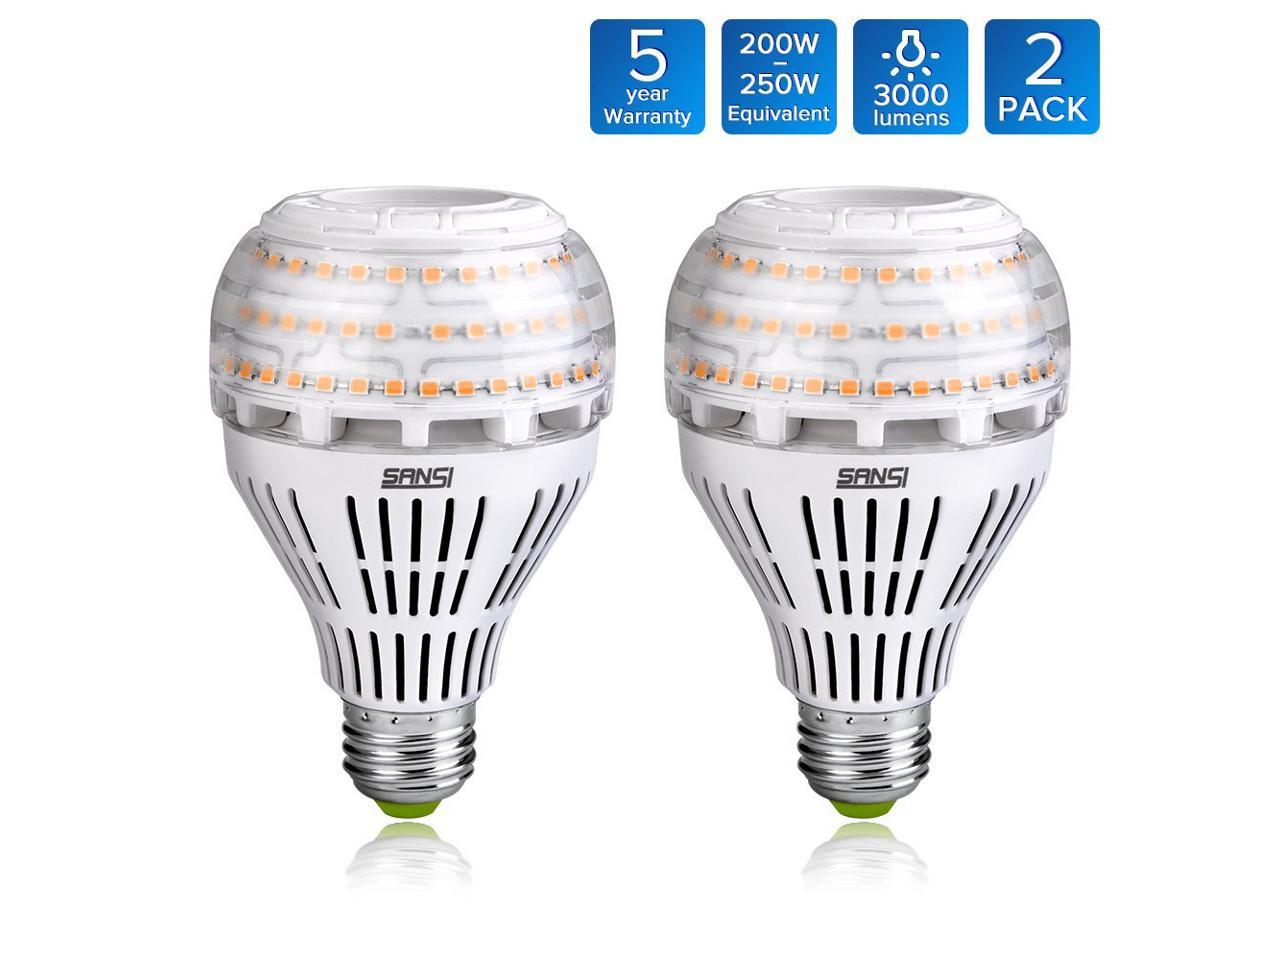 200W Incandescent Bulbs Equivalent E27 Large Edison Screw 2600Lm 3000K Warm White Pack of 3 Hzsanue Led Light Bulbs 26W